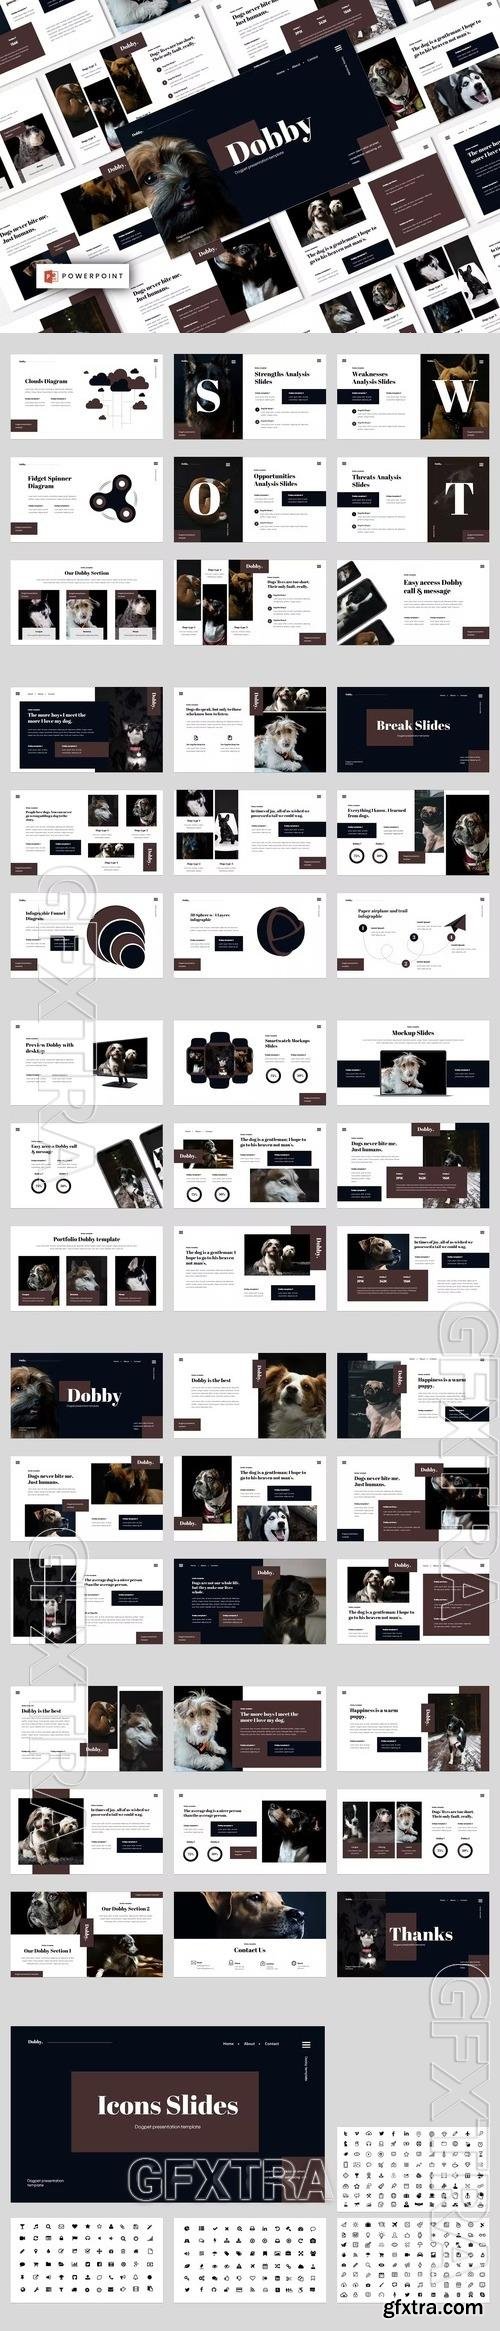 Dobby - Pet Shop Powerpoint Template SAKJRBH